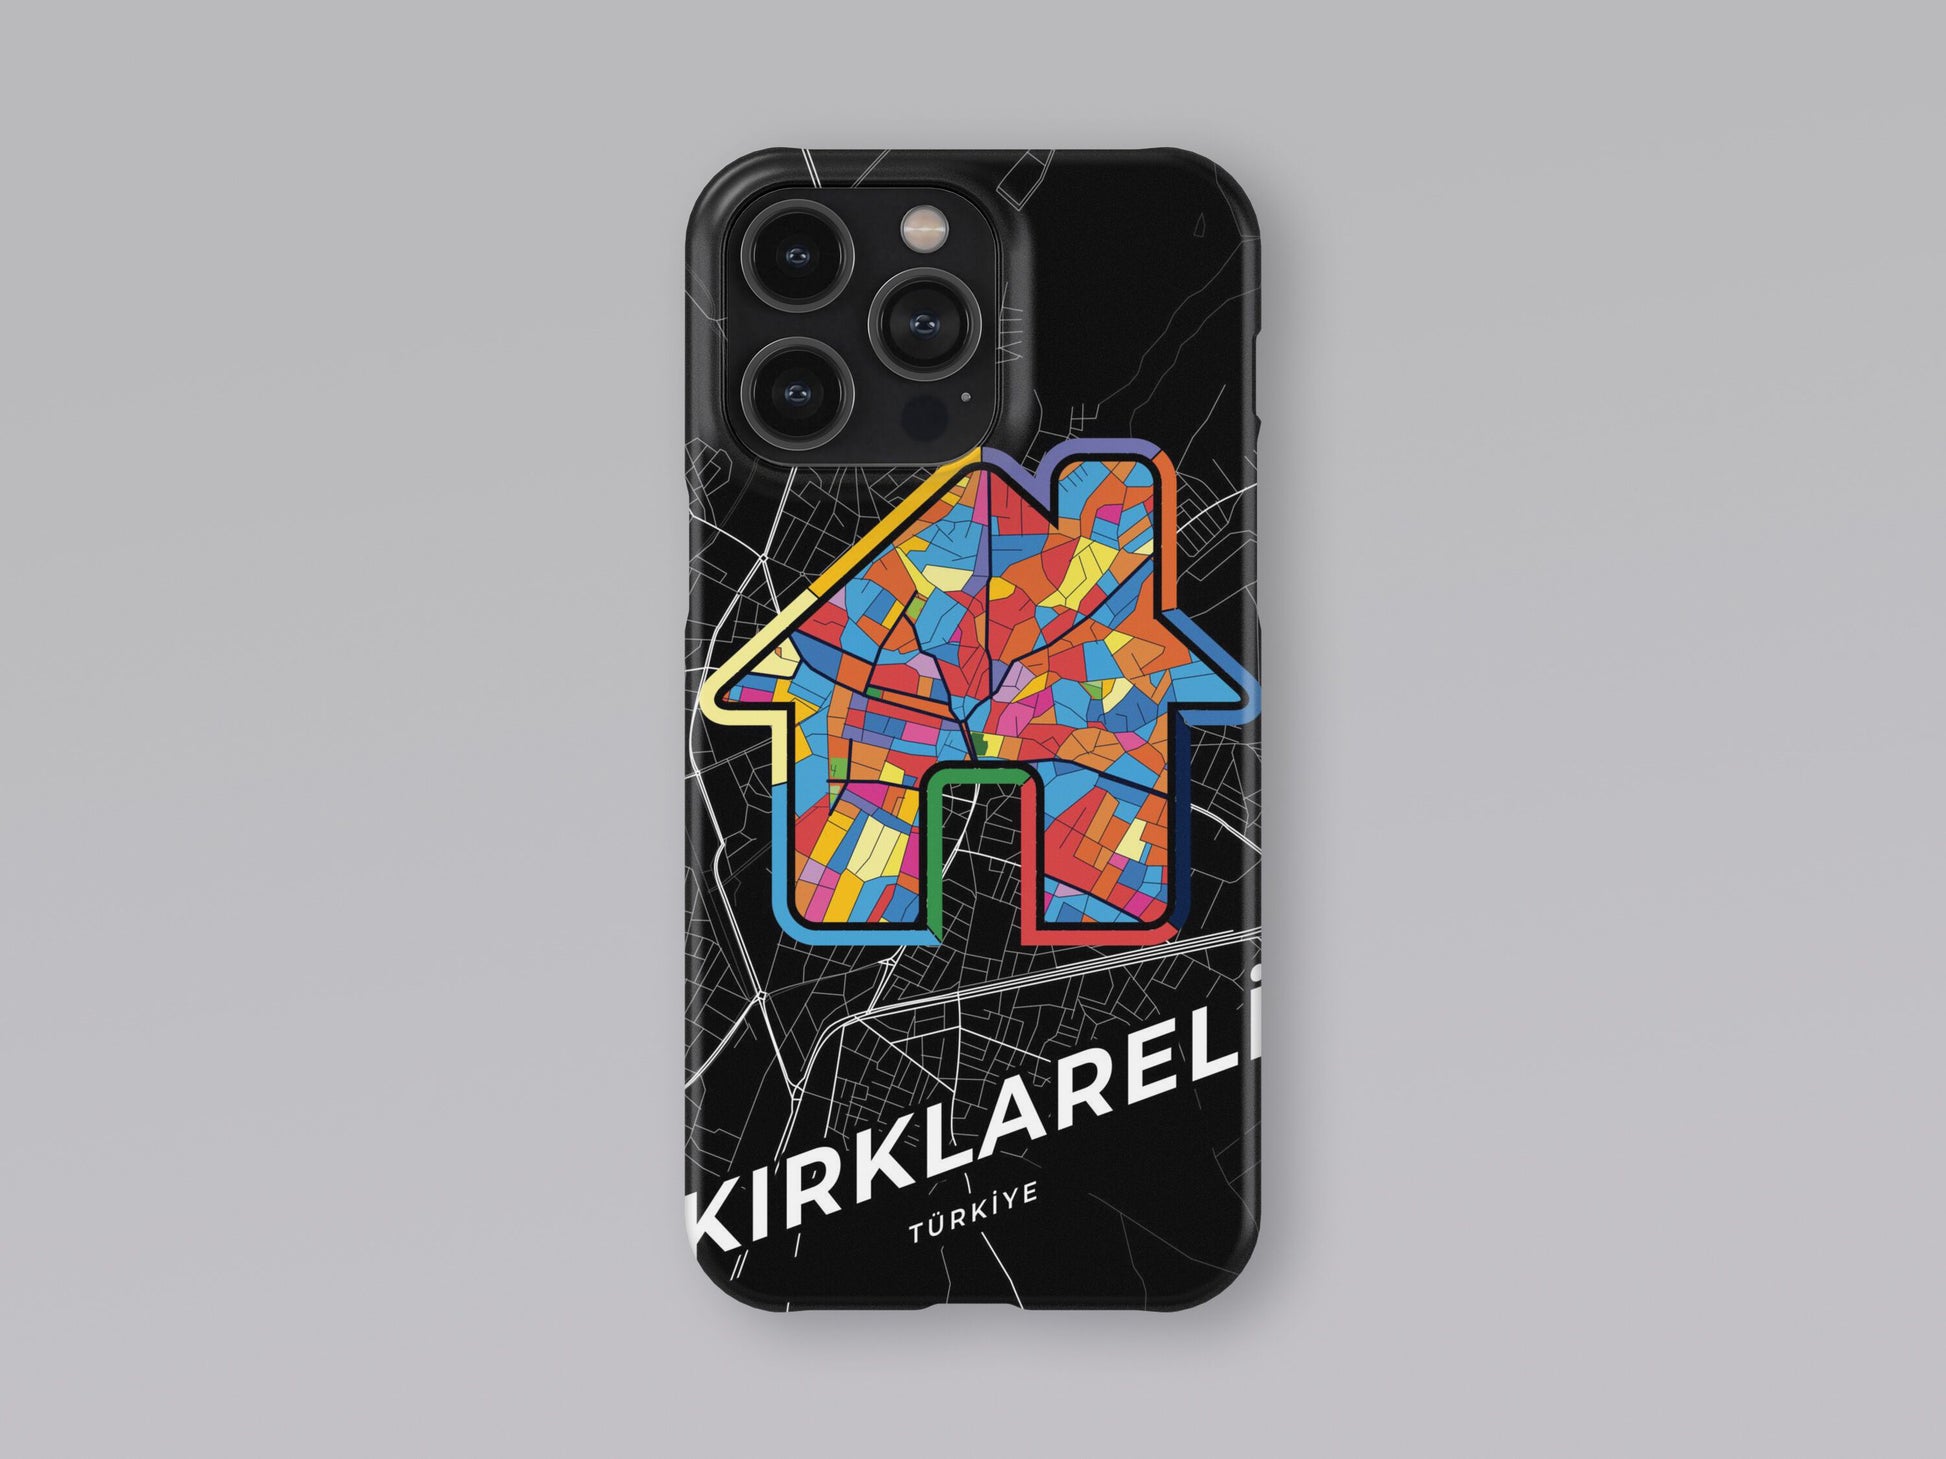 Kırklareli Turkey slim phone case with colorful icon. Birthday, wedding or housewarming gift. Couple match cases. 3